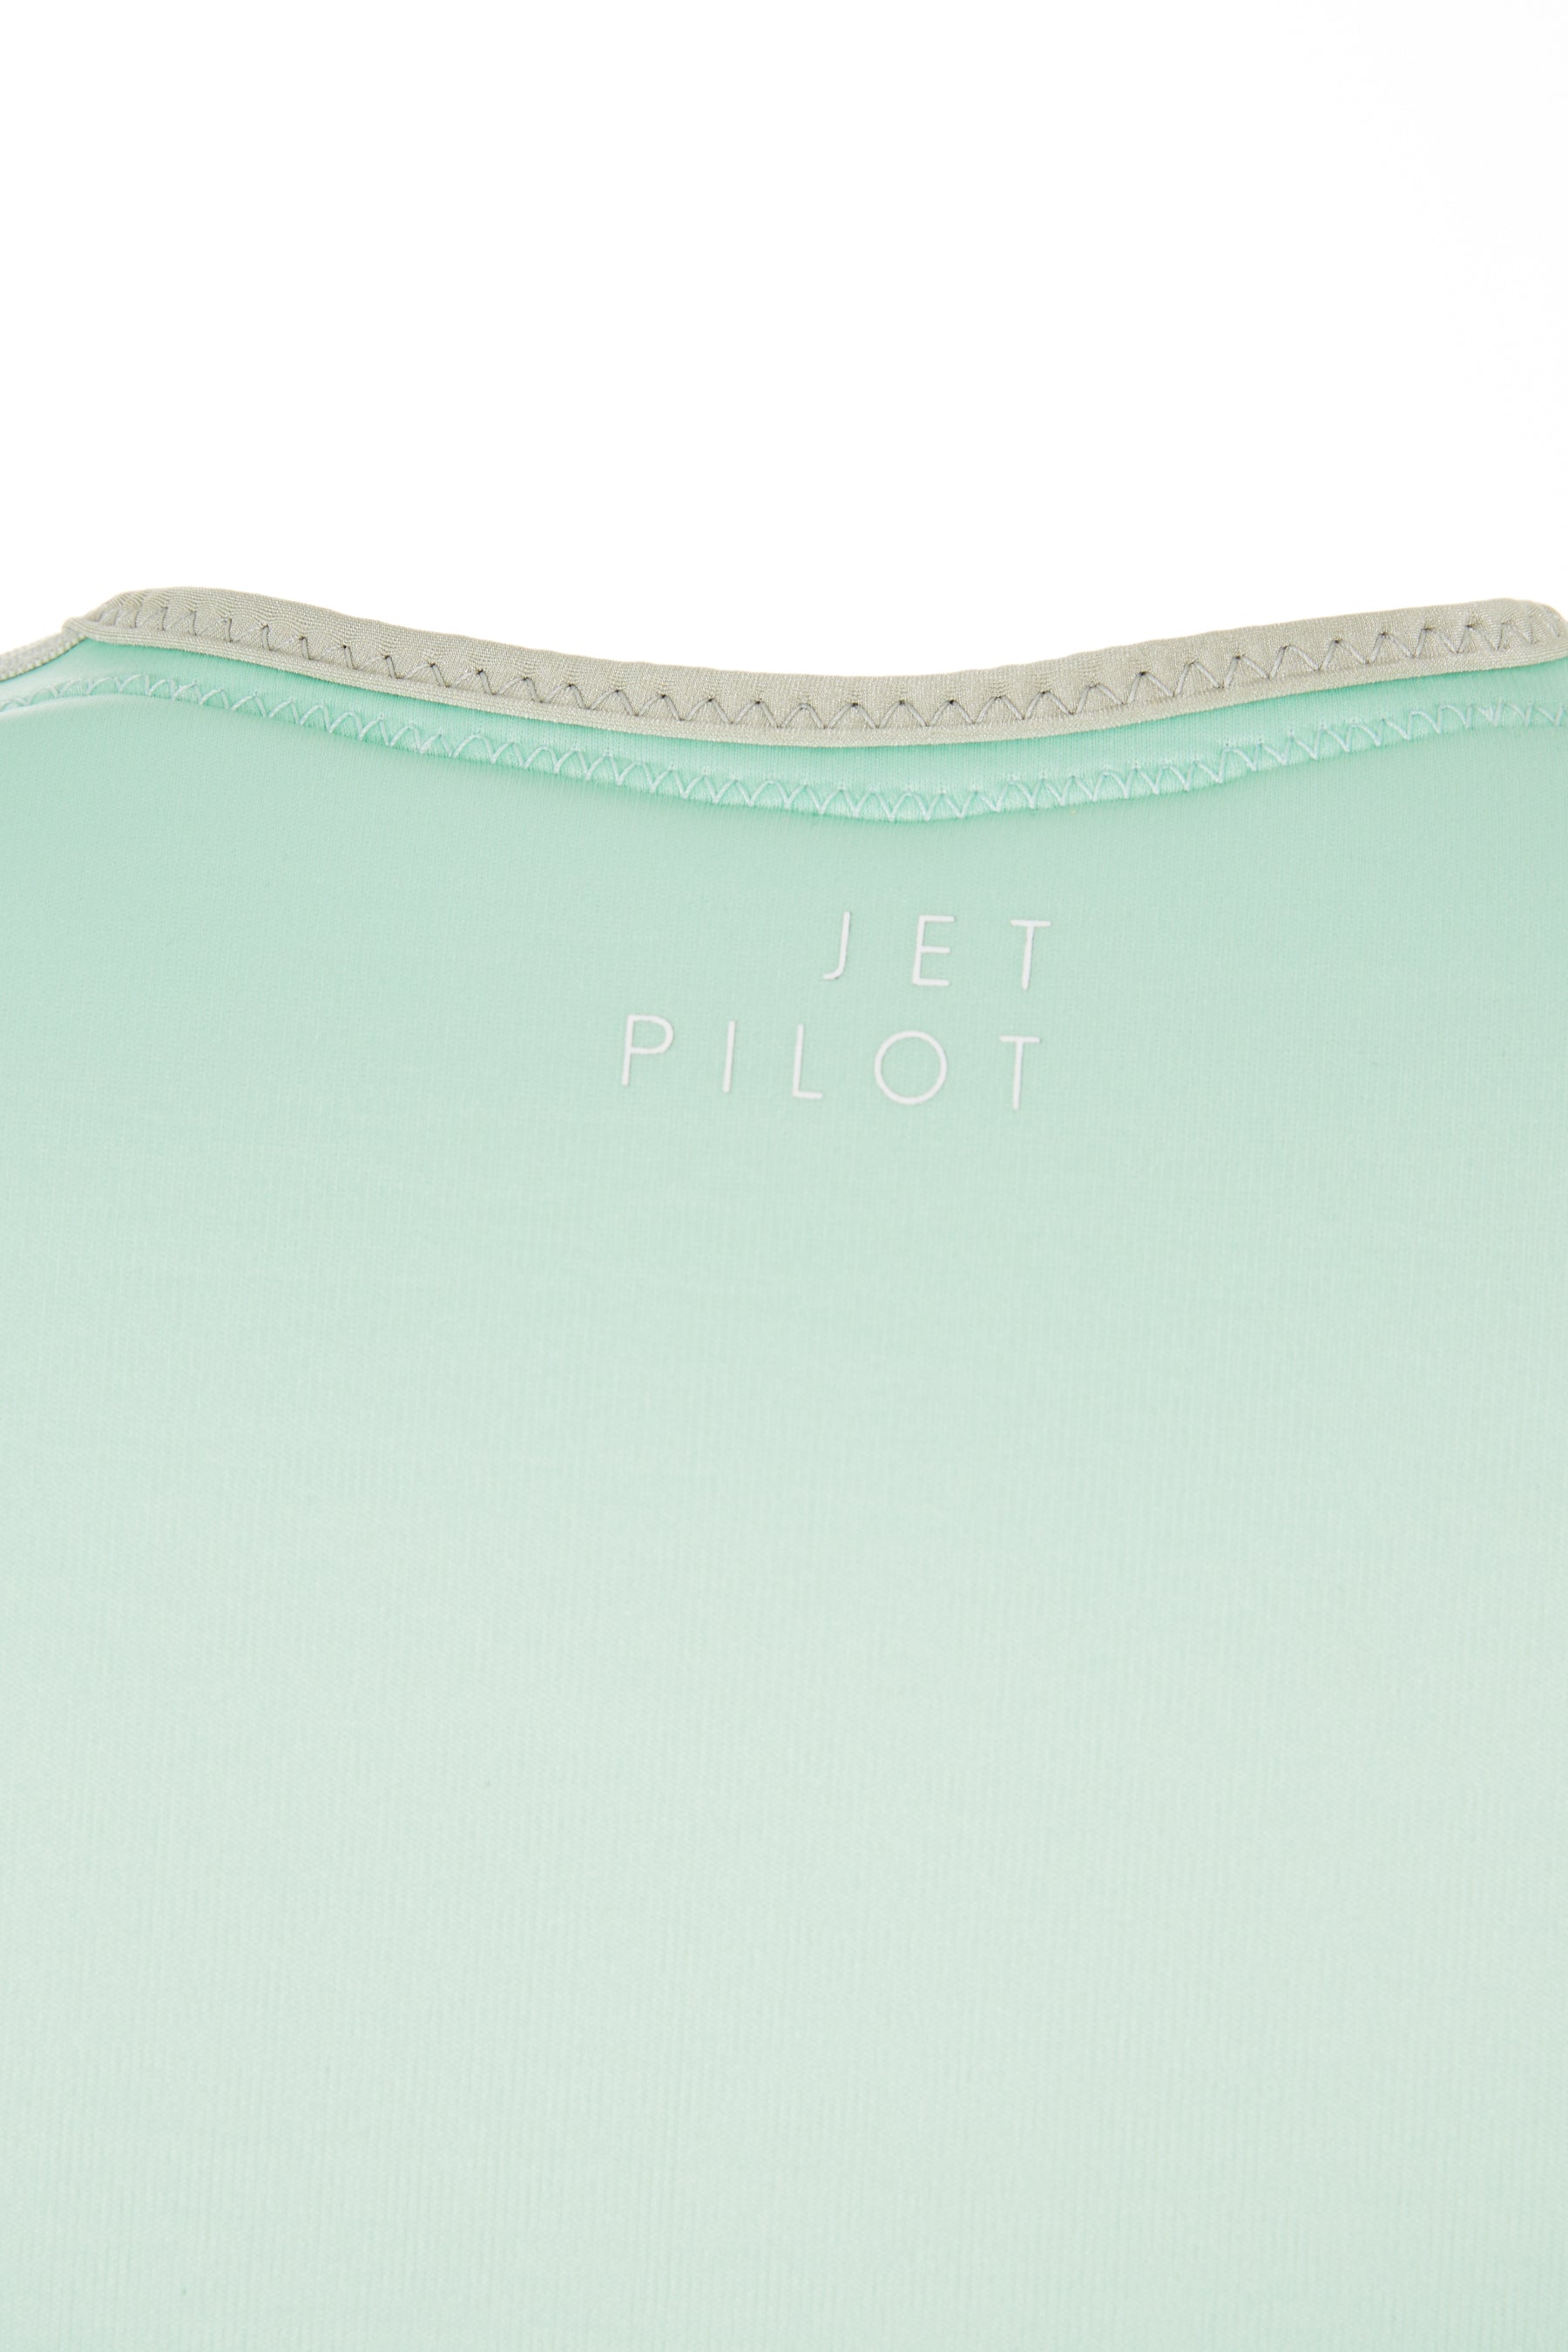 Jetpilot Allure Fe Ladies Neo Vest - Mint 6